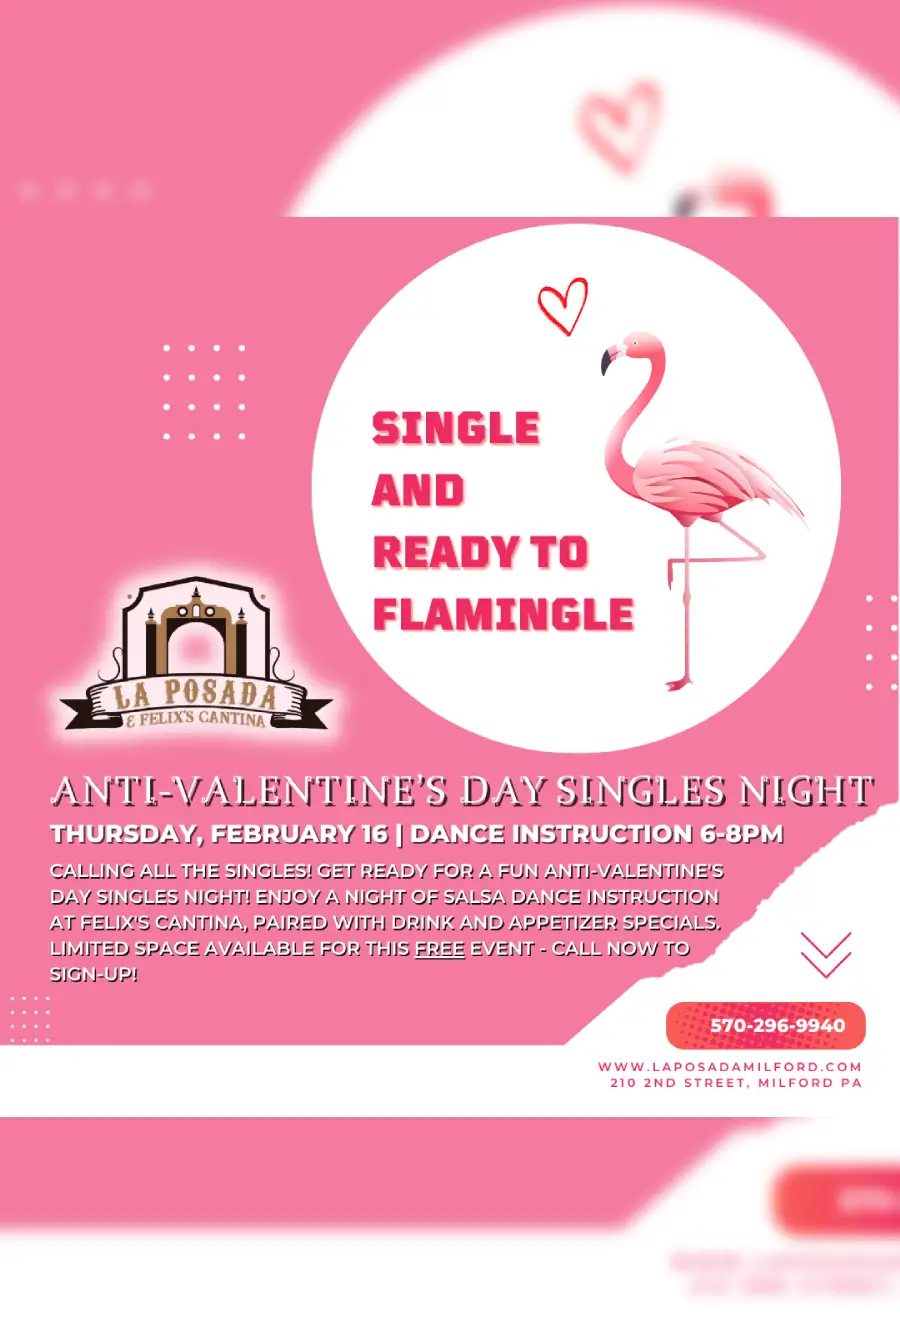 Single and ready to flamingle